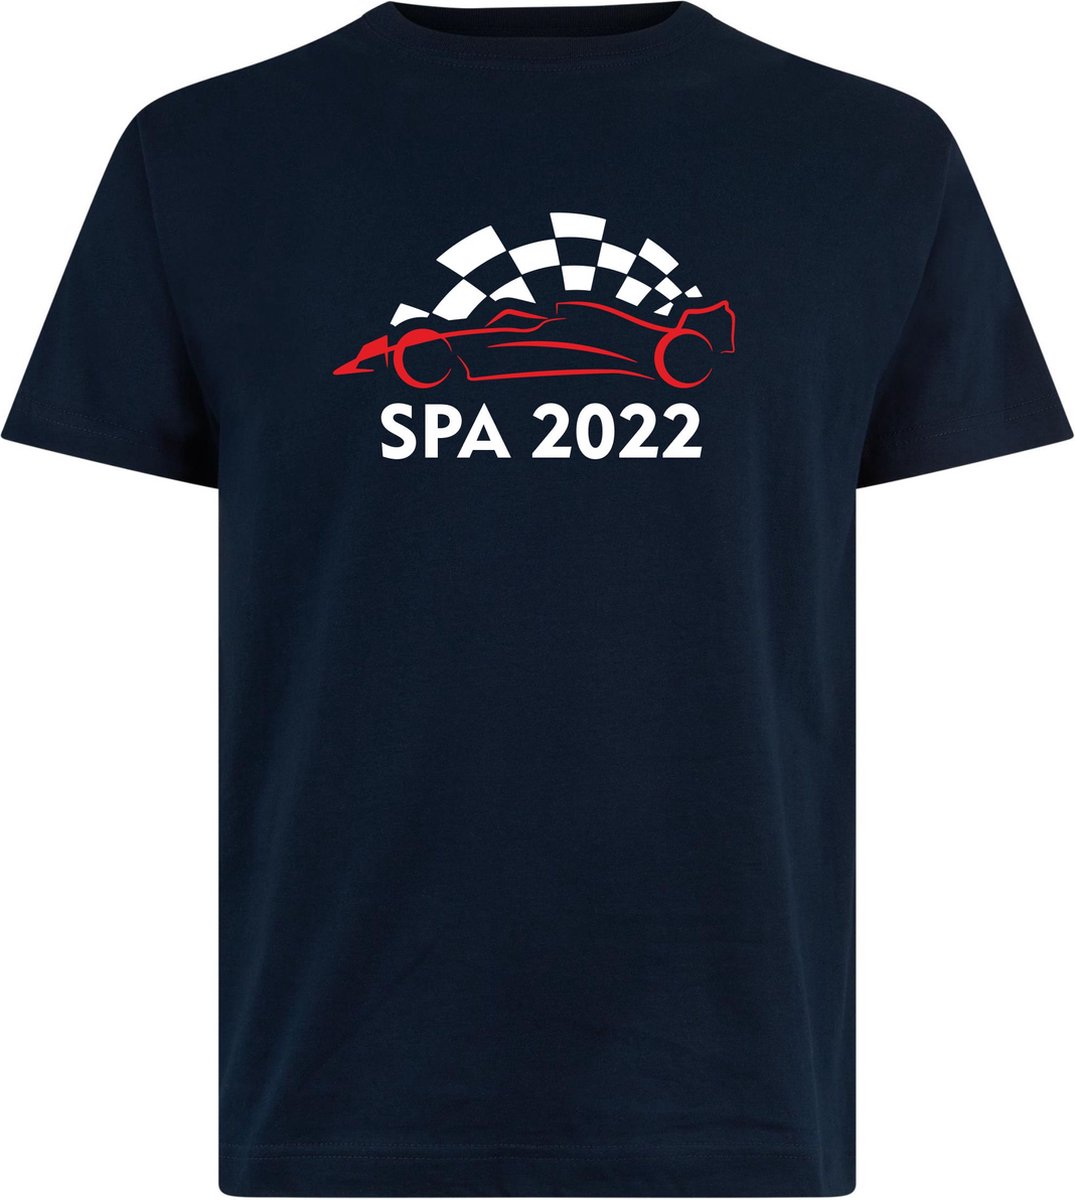 T-shirt Spa 2022 met raceauto | Max Verstappen / Red Bull Racing / Formule 1 fan | Grand Prix Circuit Spa-Francorchamps | kleding shirt | Navy | maat XS